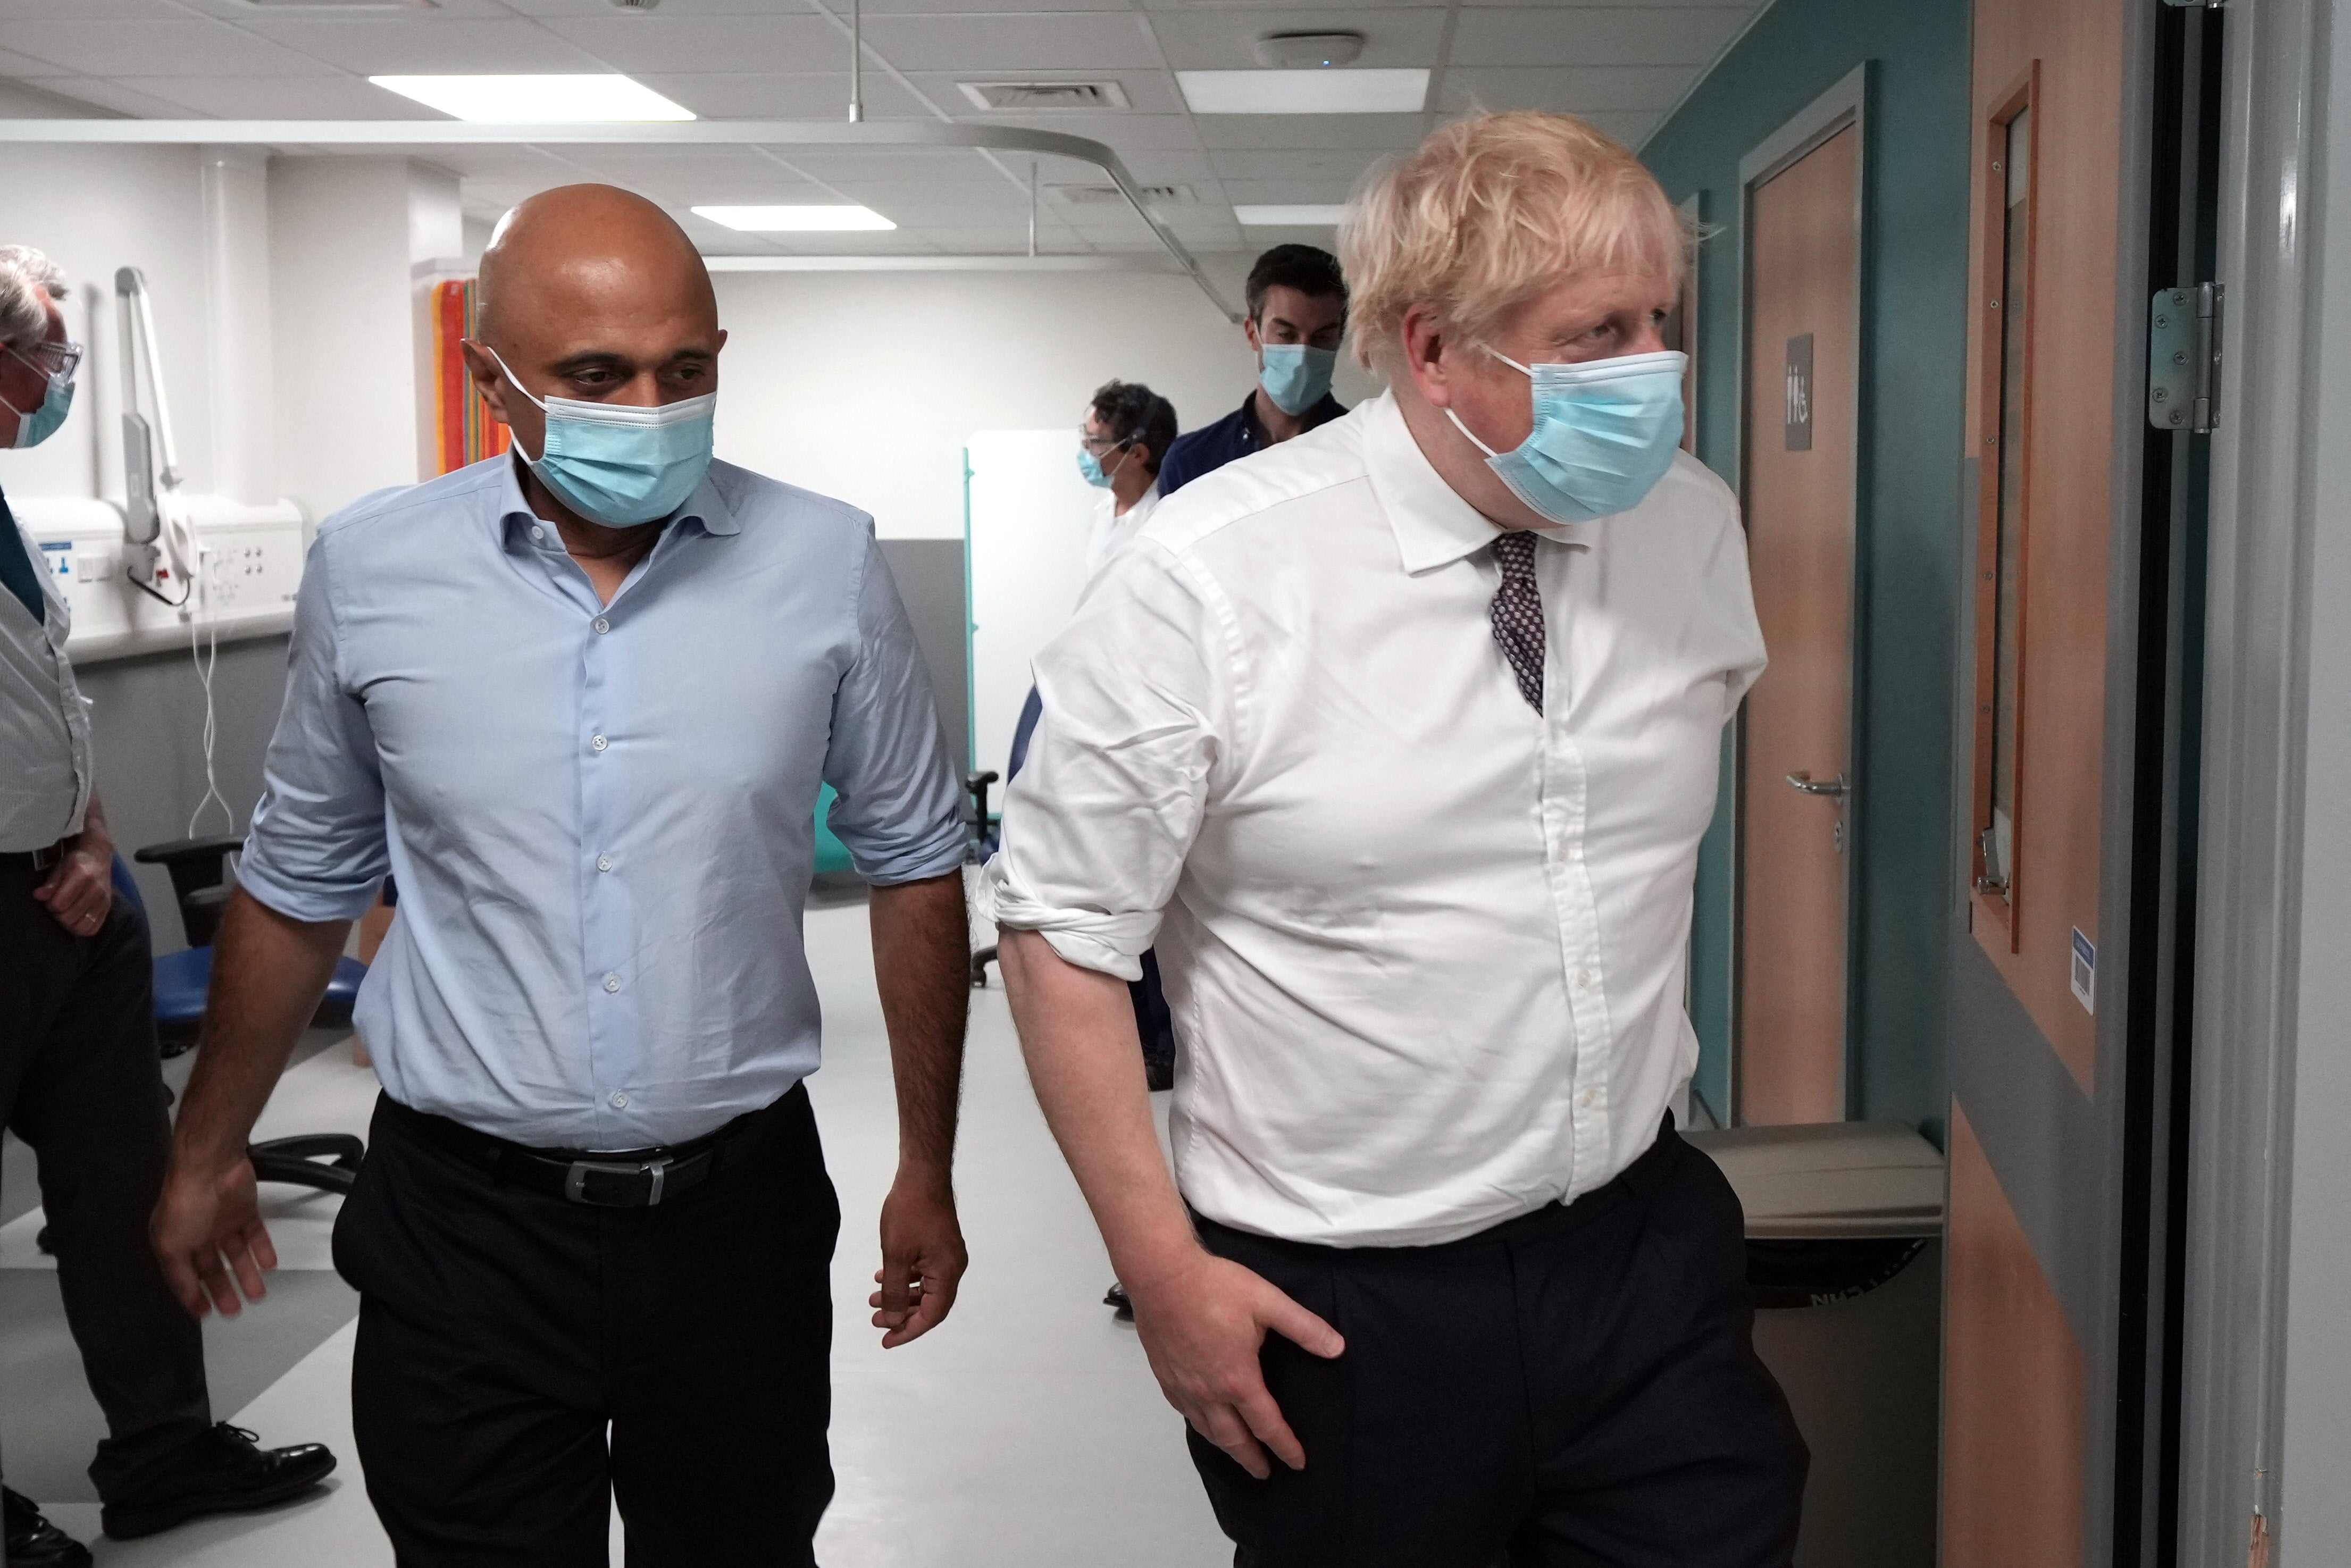 Boris Johnson and the health secretary during a hospital visit